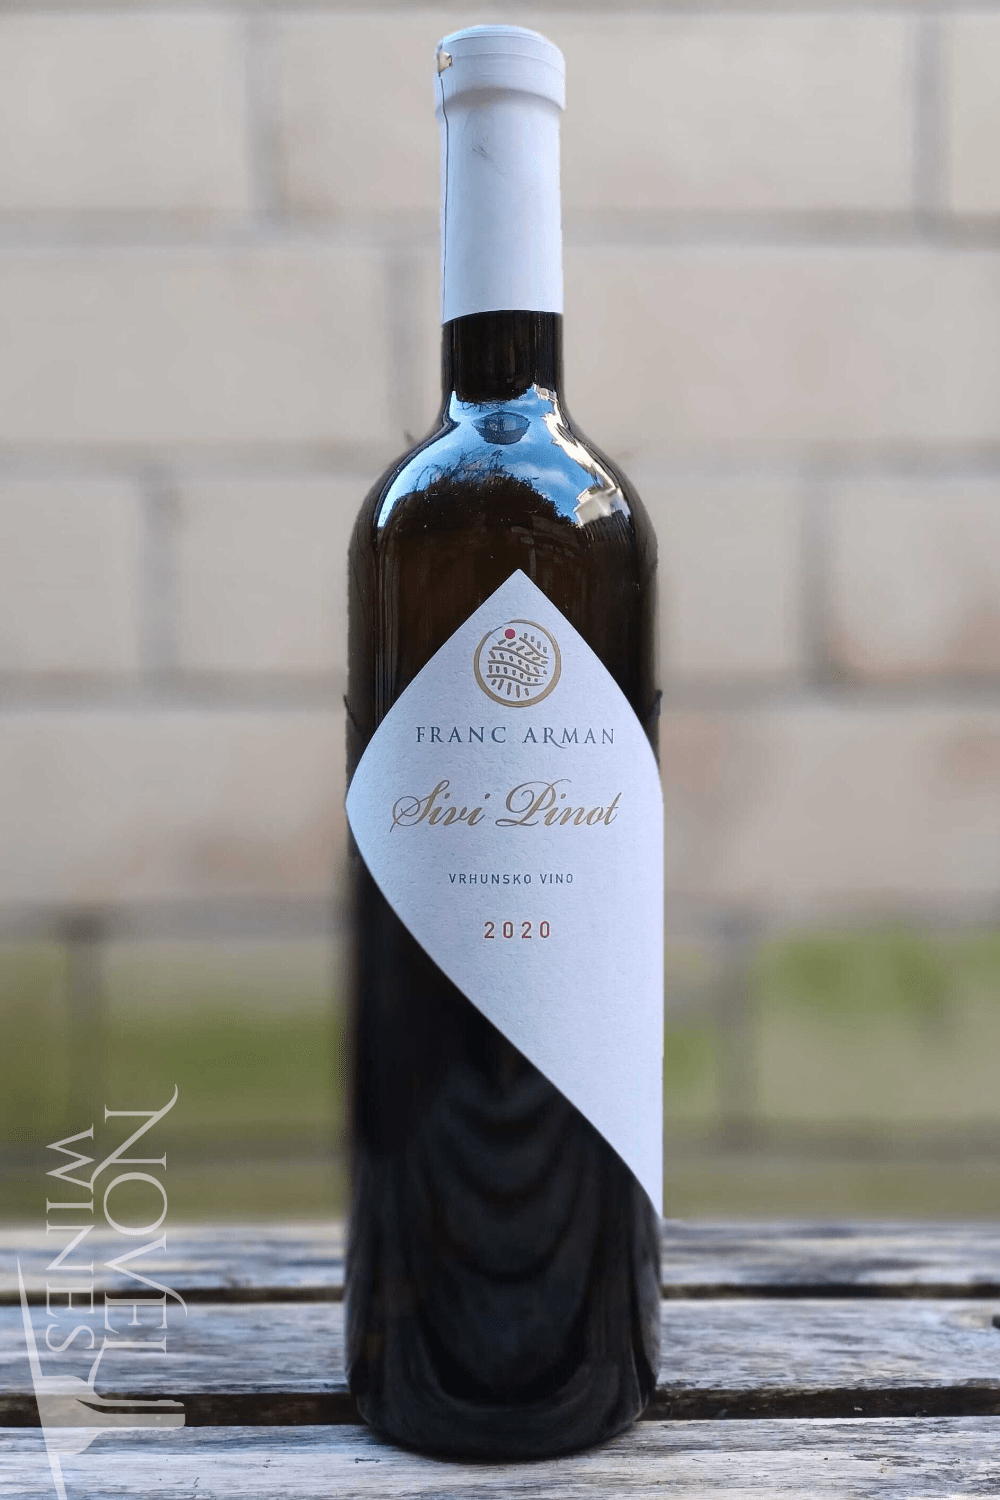 Franc Arman White Wine Franc Arman Sivi Pinot 2020, Croatia